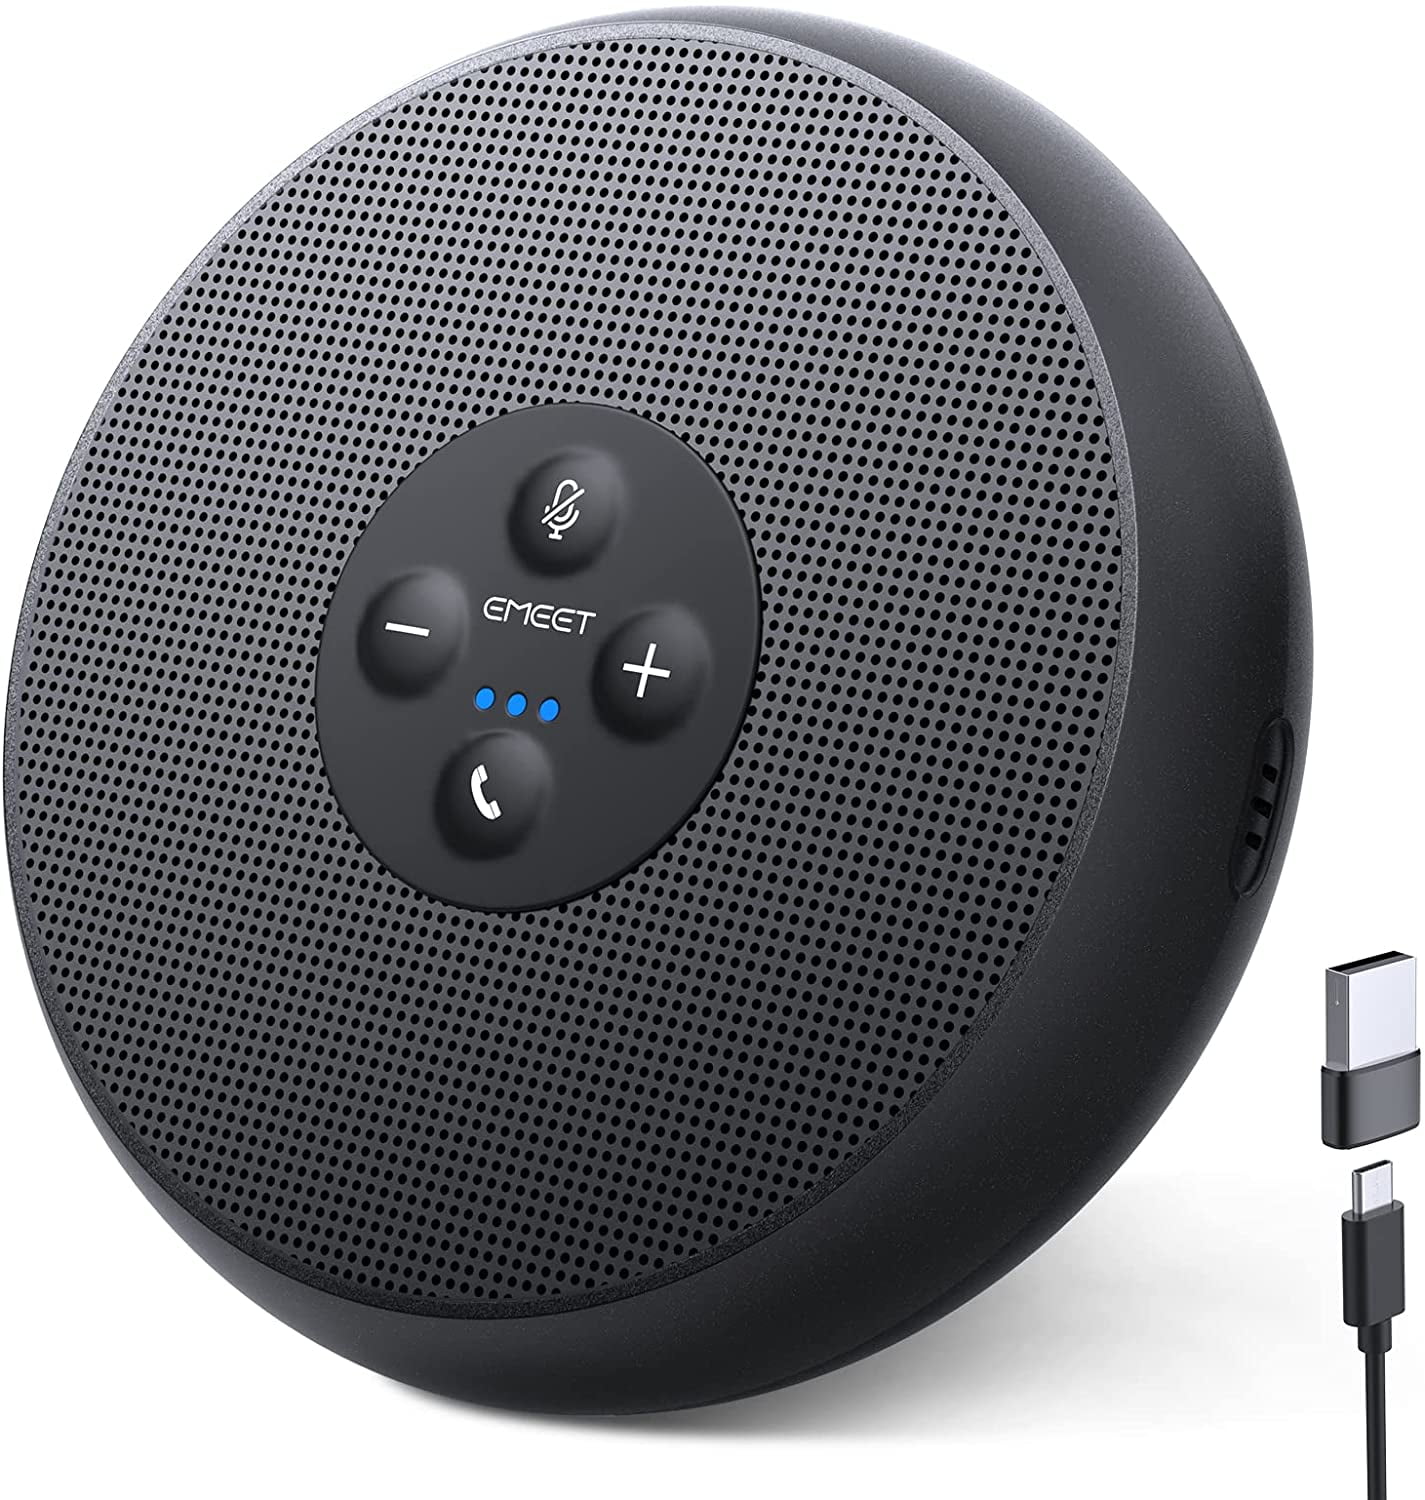 Conference Speakerphone/bluetooth speaker EMEET M1A USB Reduction Speaker W/Microphones Noise